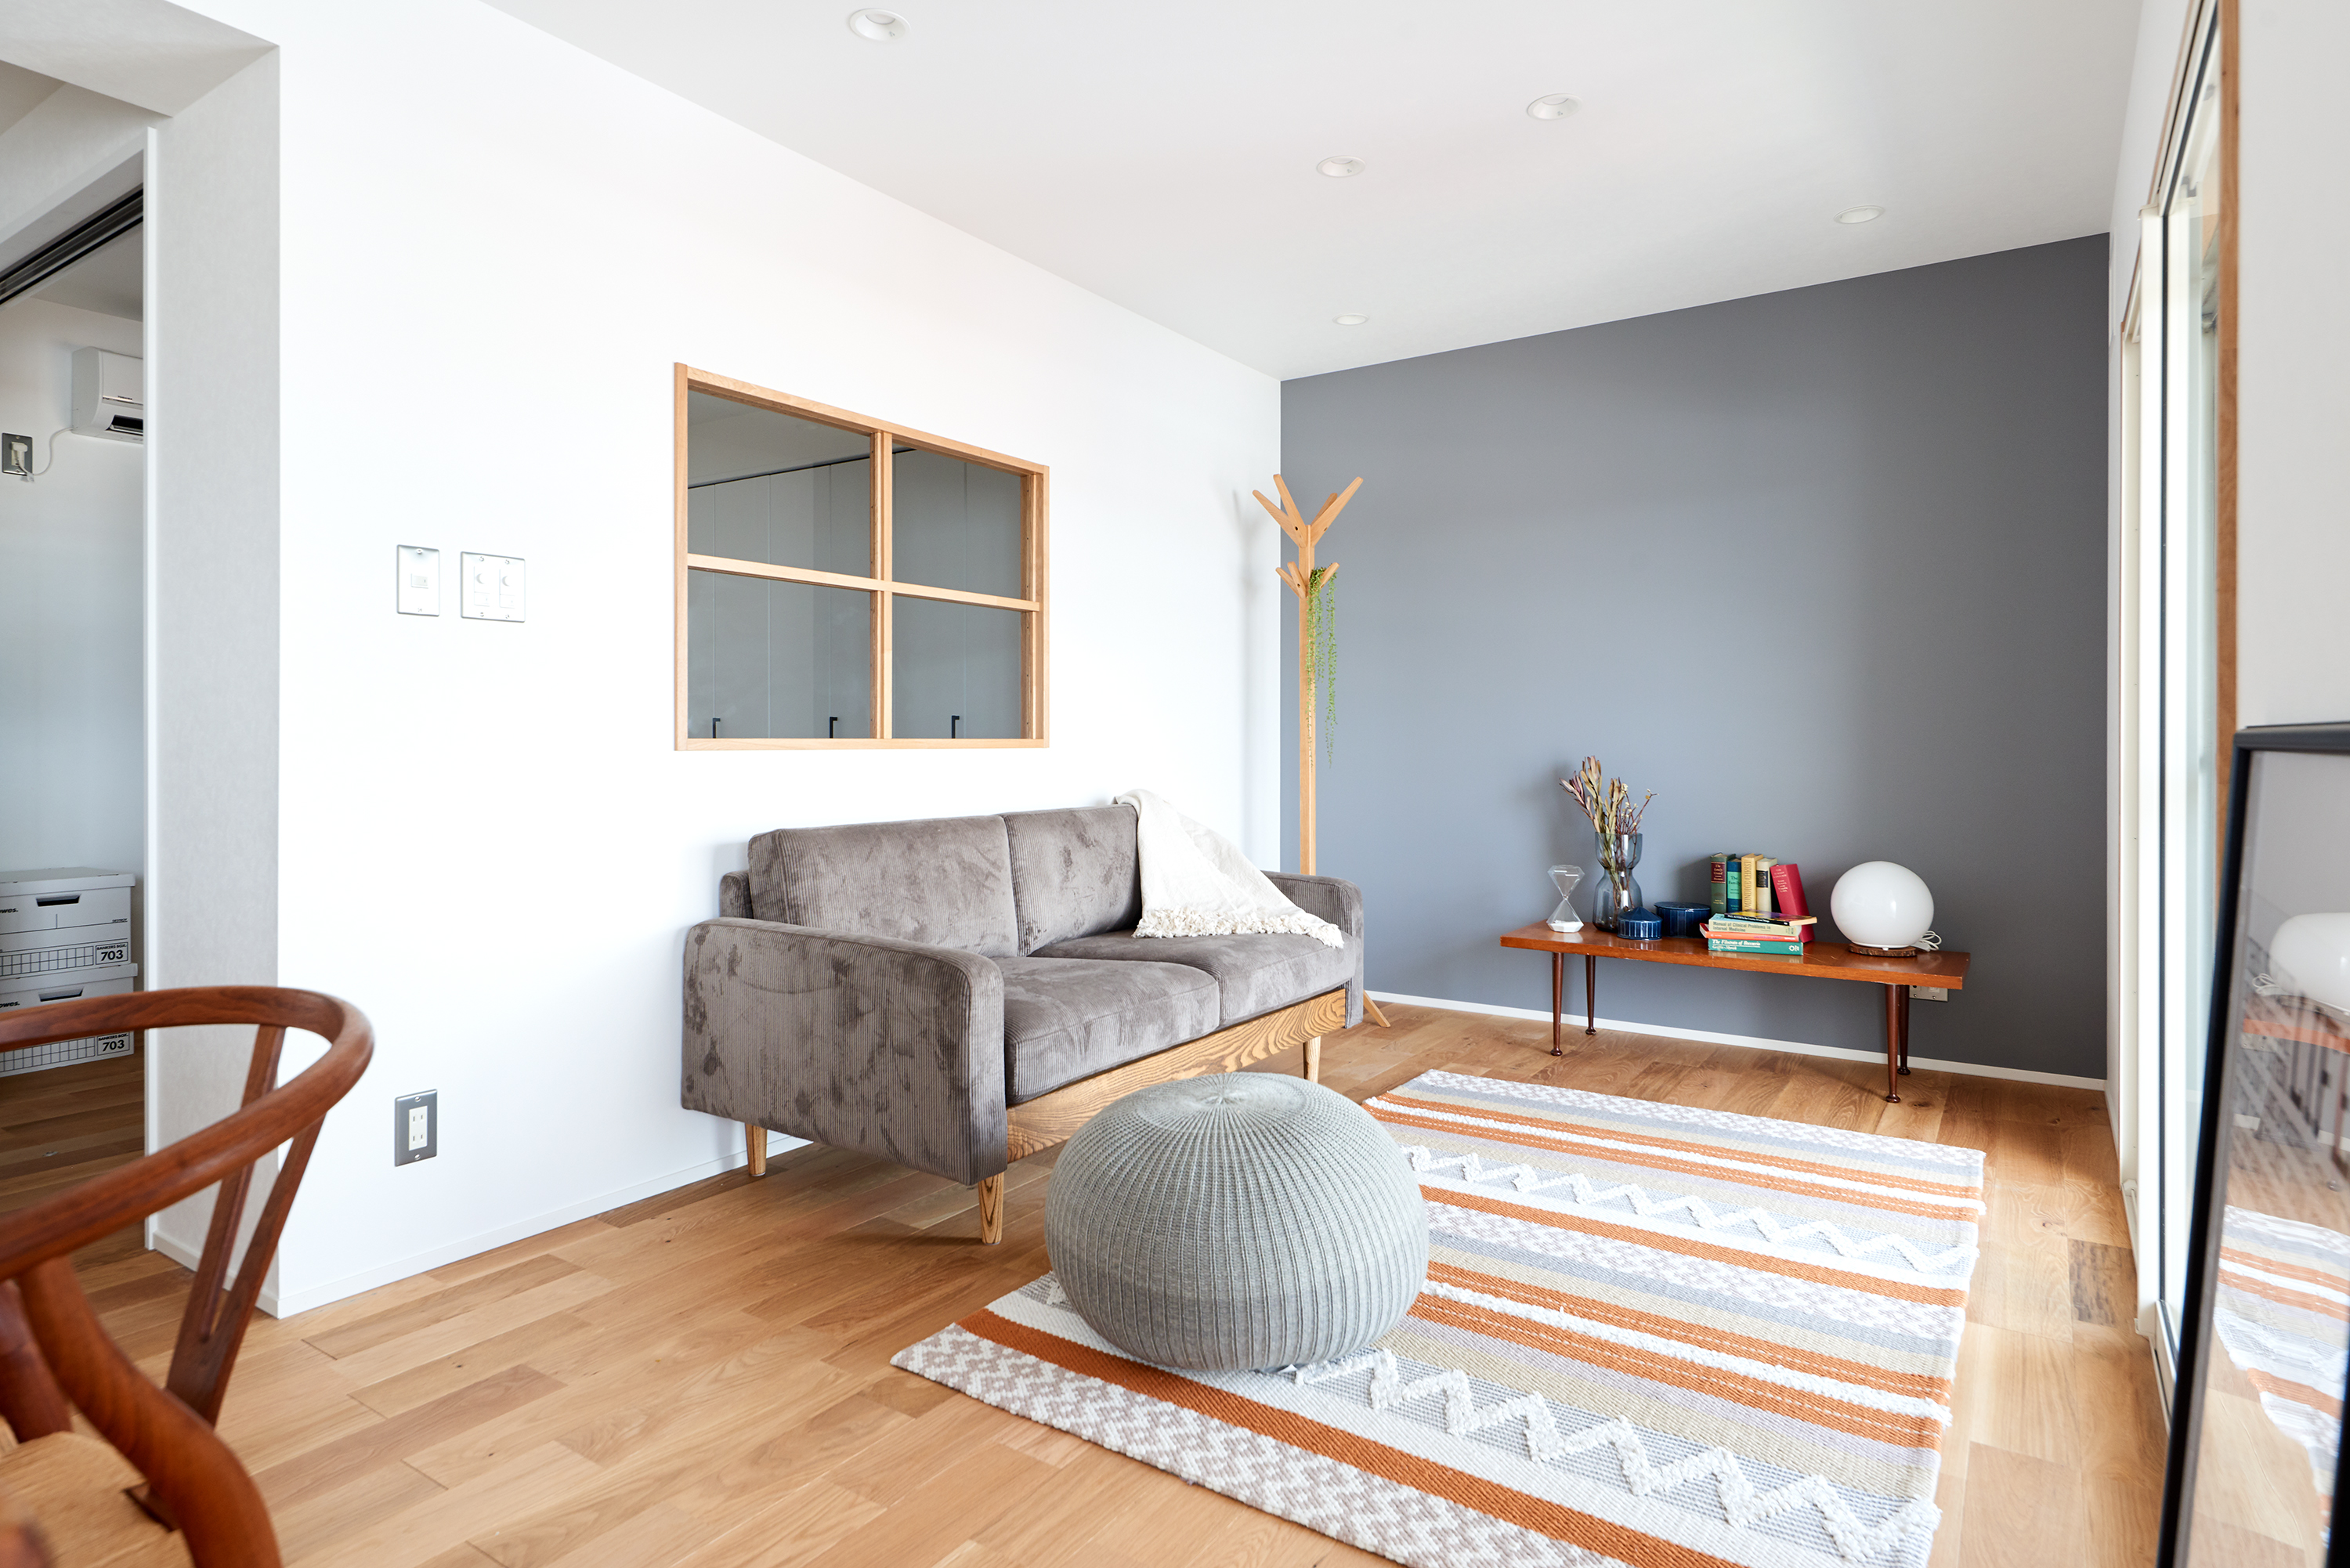 Sold 浦和太田窪団地 月々6万円で叶うオシャレな空間でのんびり景色を眺める生活 Met Design Home